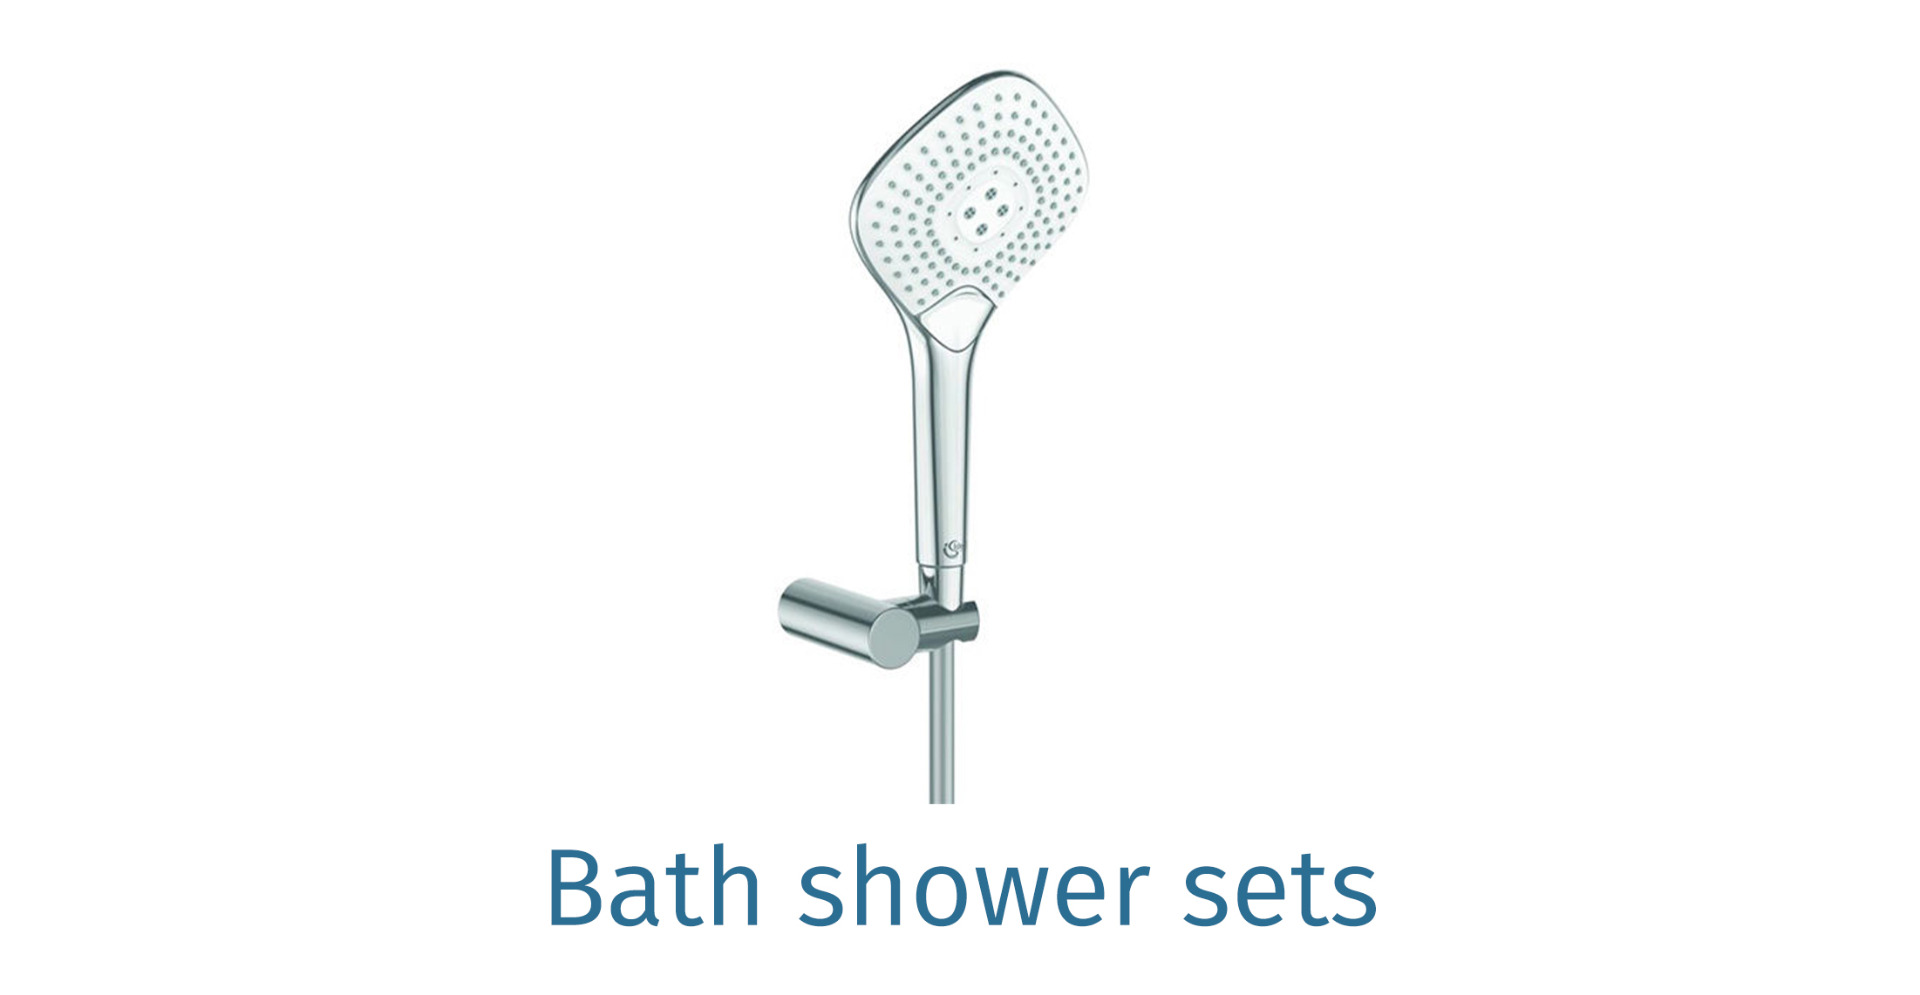 Bath shower sets